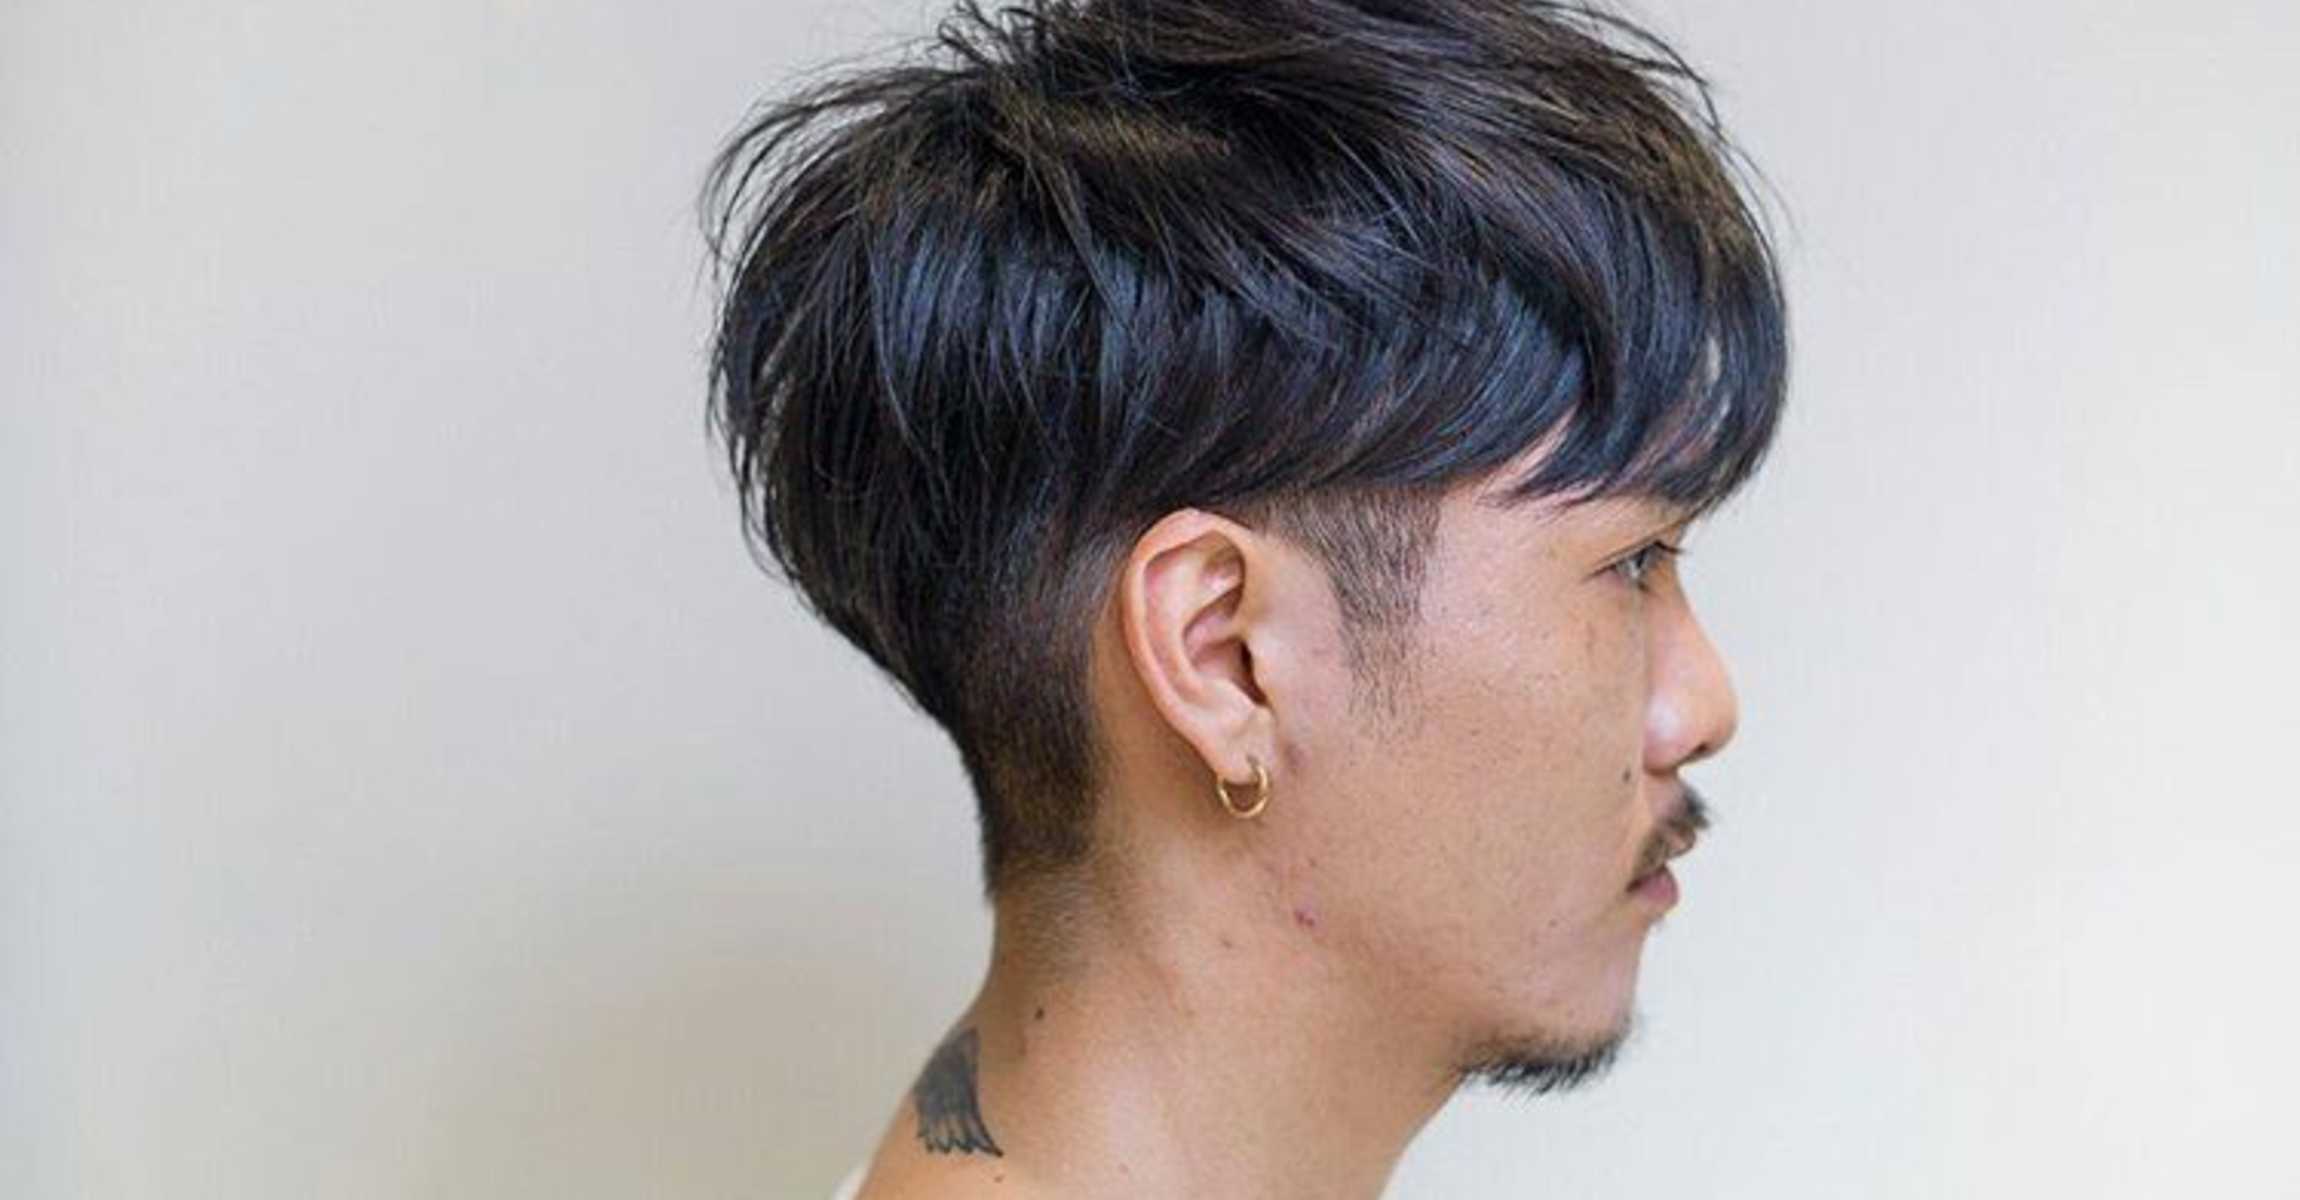 Asian hair mullet